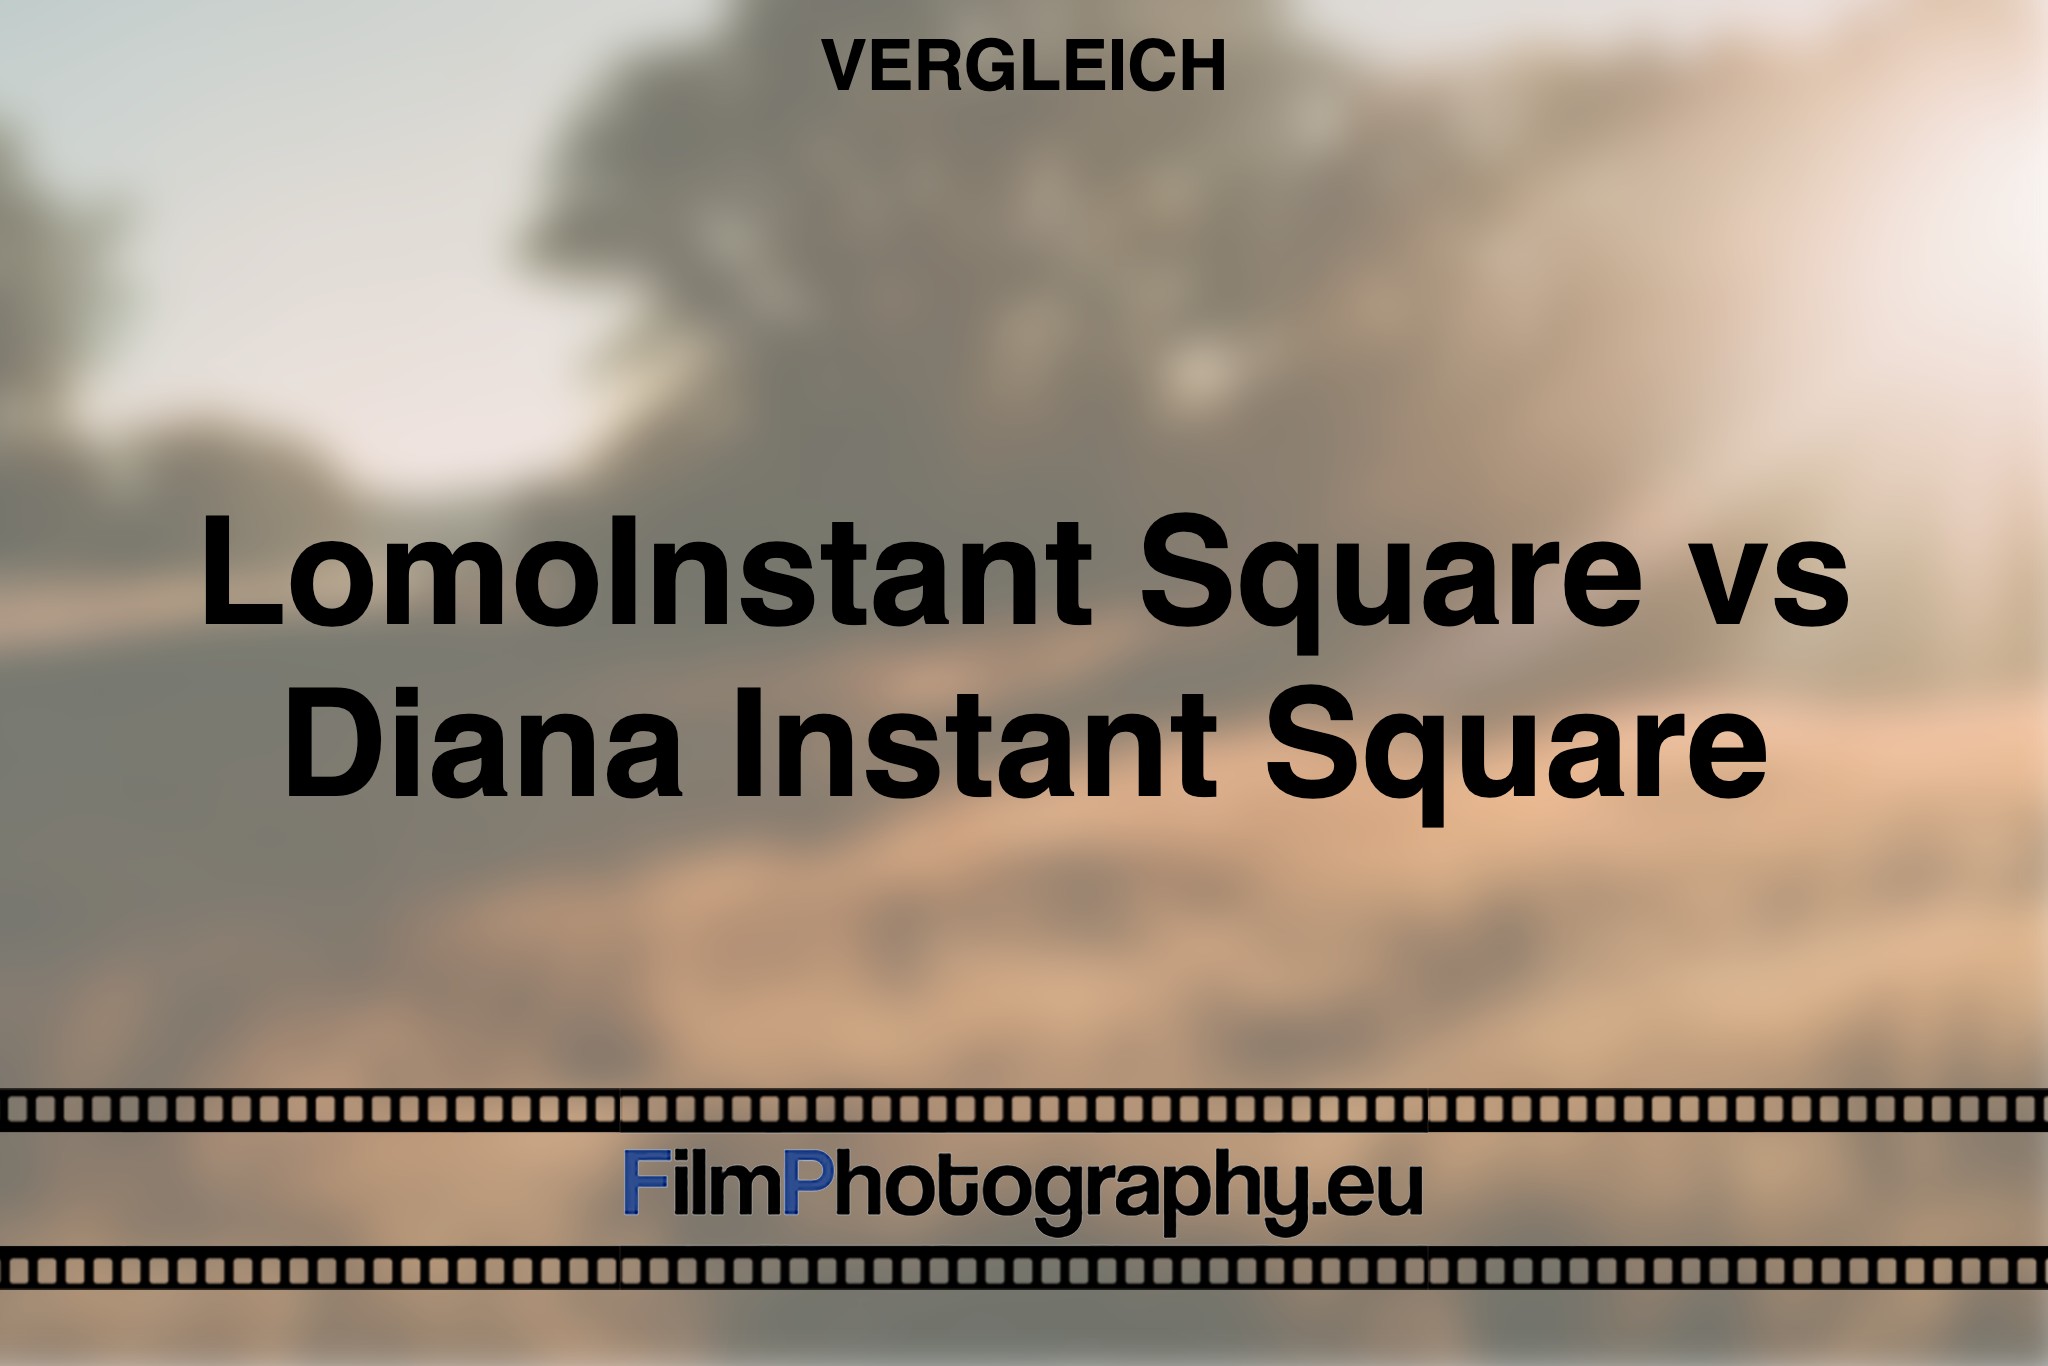 lomoinstant-square-vs-diana-instant-square-vergleich-bnv